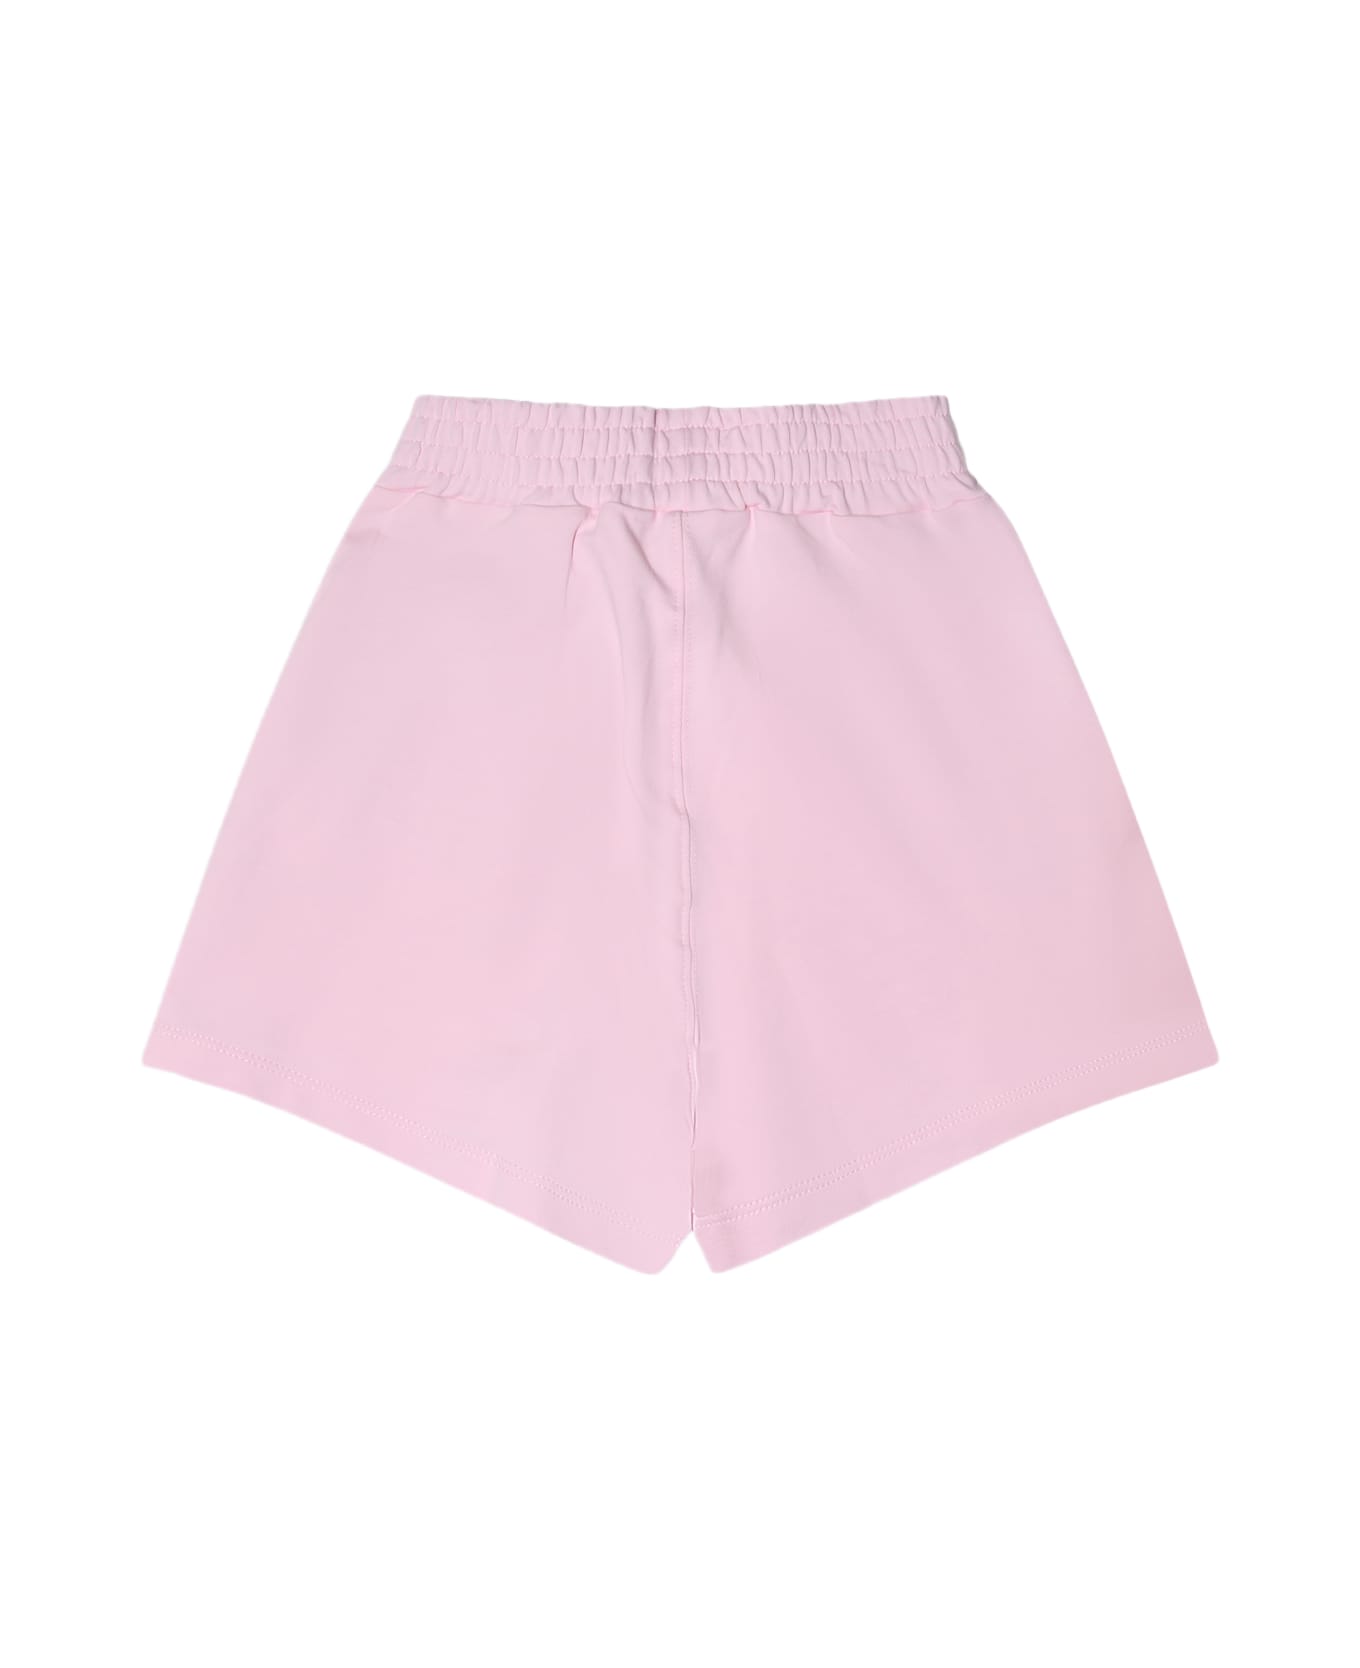 Chiara Ferragni Pink Fairytale Cotton Shorts - ROSA FAIRYTALE ボトムス